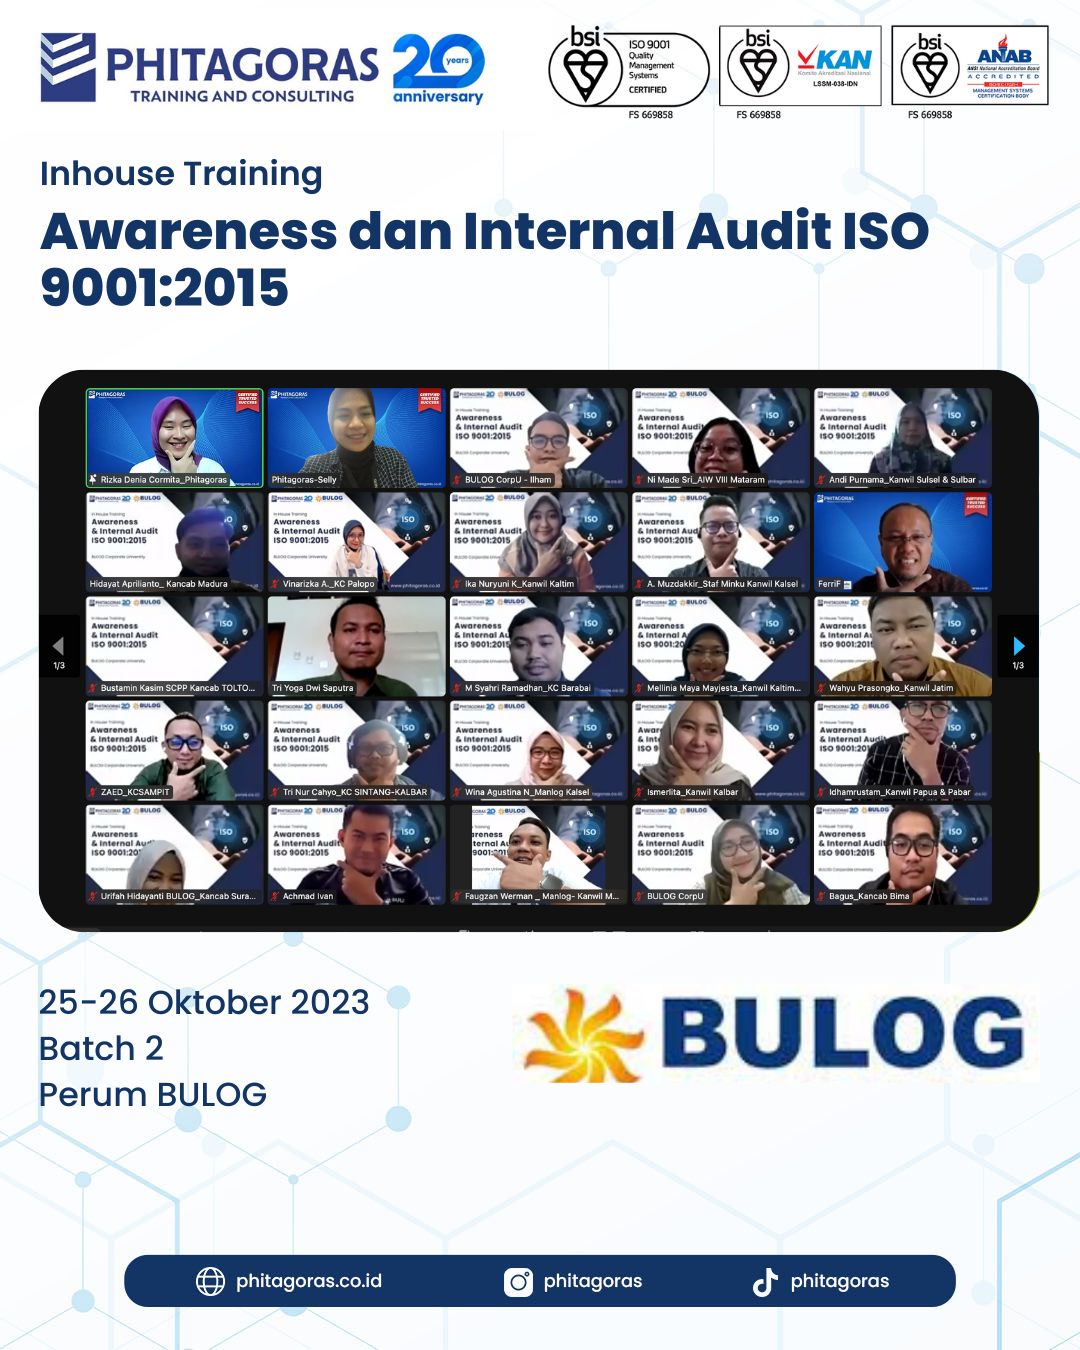 Inhouse Training Awareness dan Internal Audit ISO 9001:2015 - Perum BULOG Batch 2